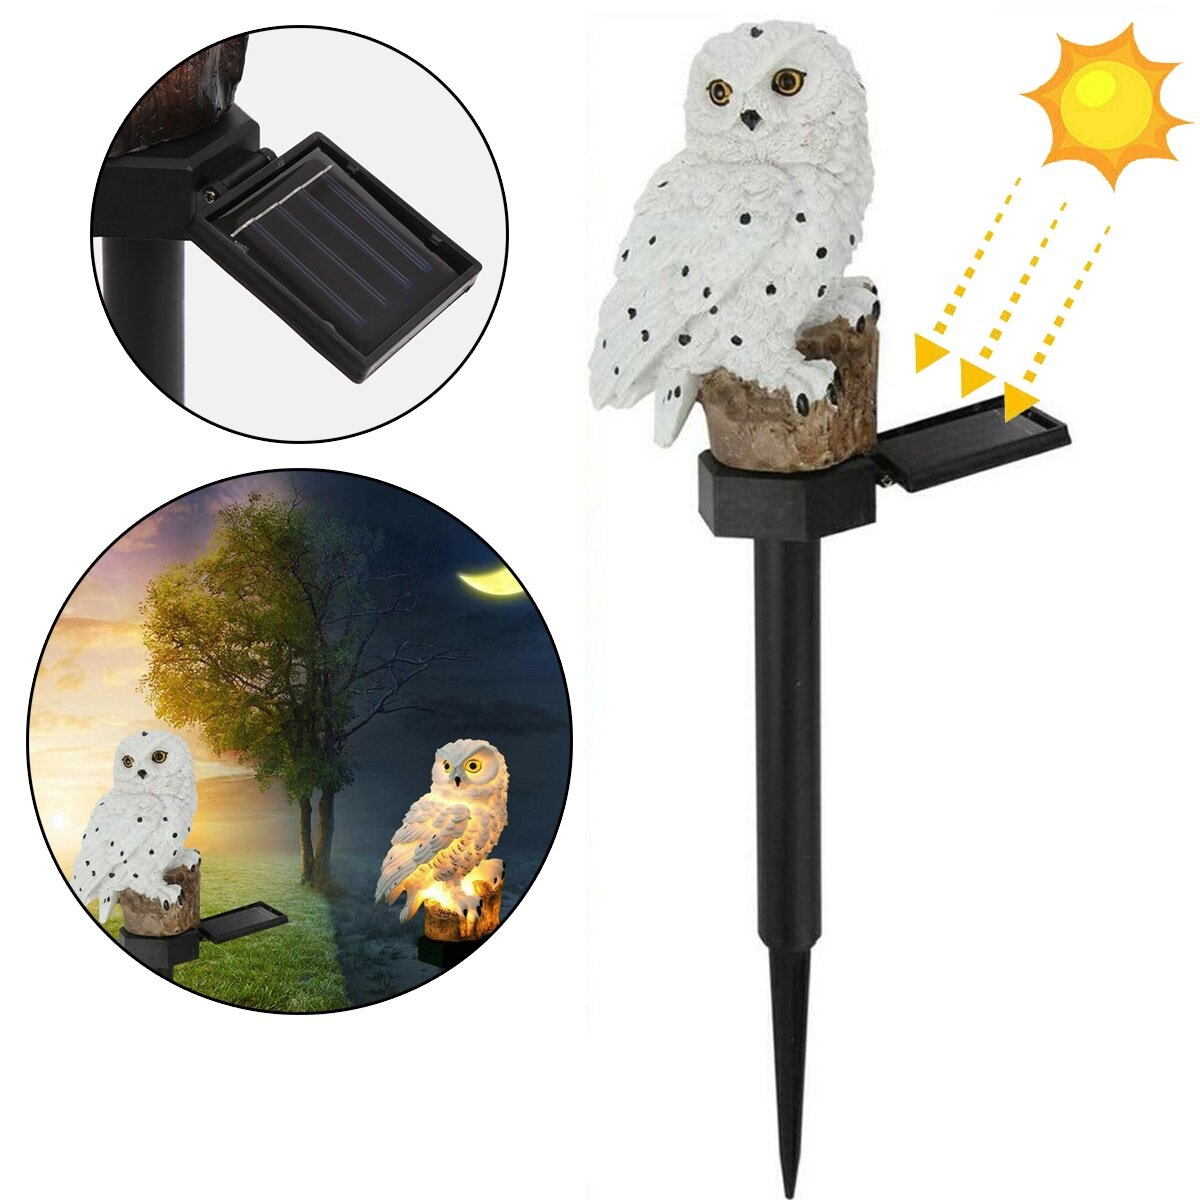 

Solar Powered Owl LED Lawn Light Waterproof Garden Yard Landscape Ornament Lamp